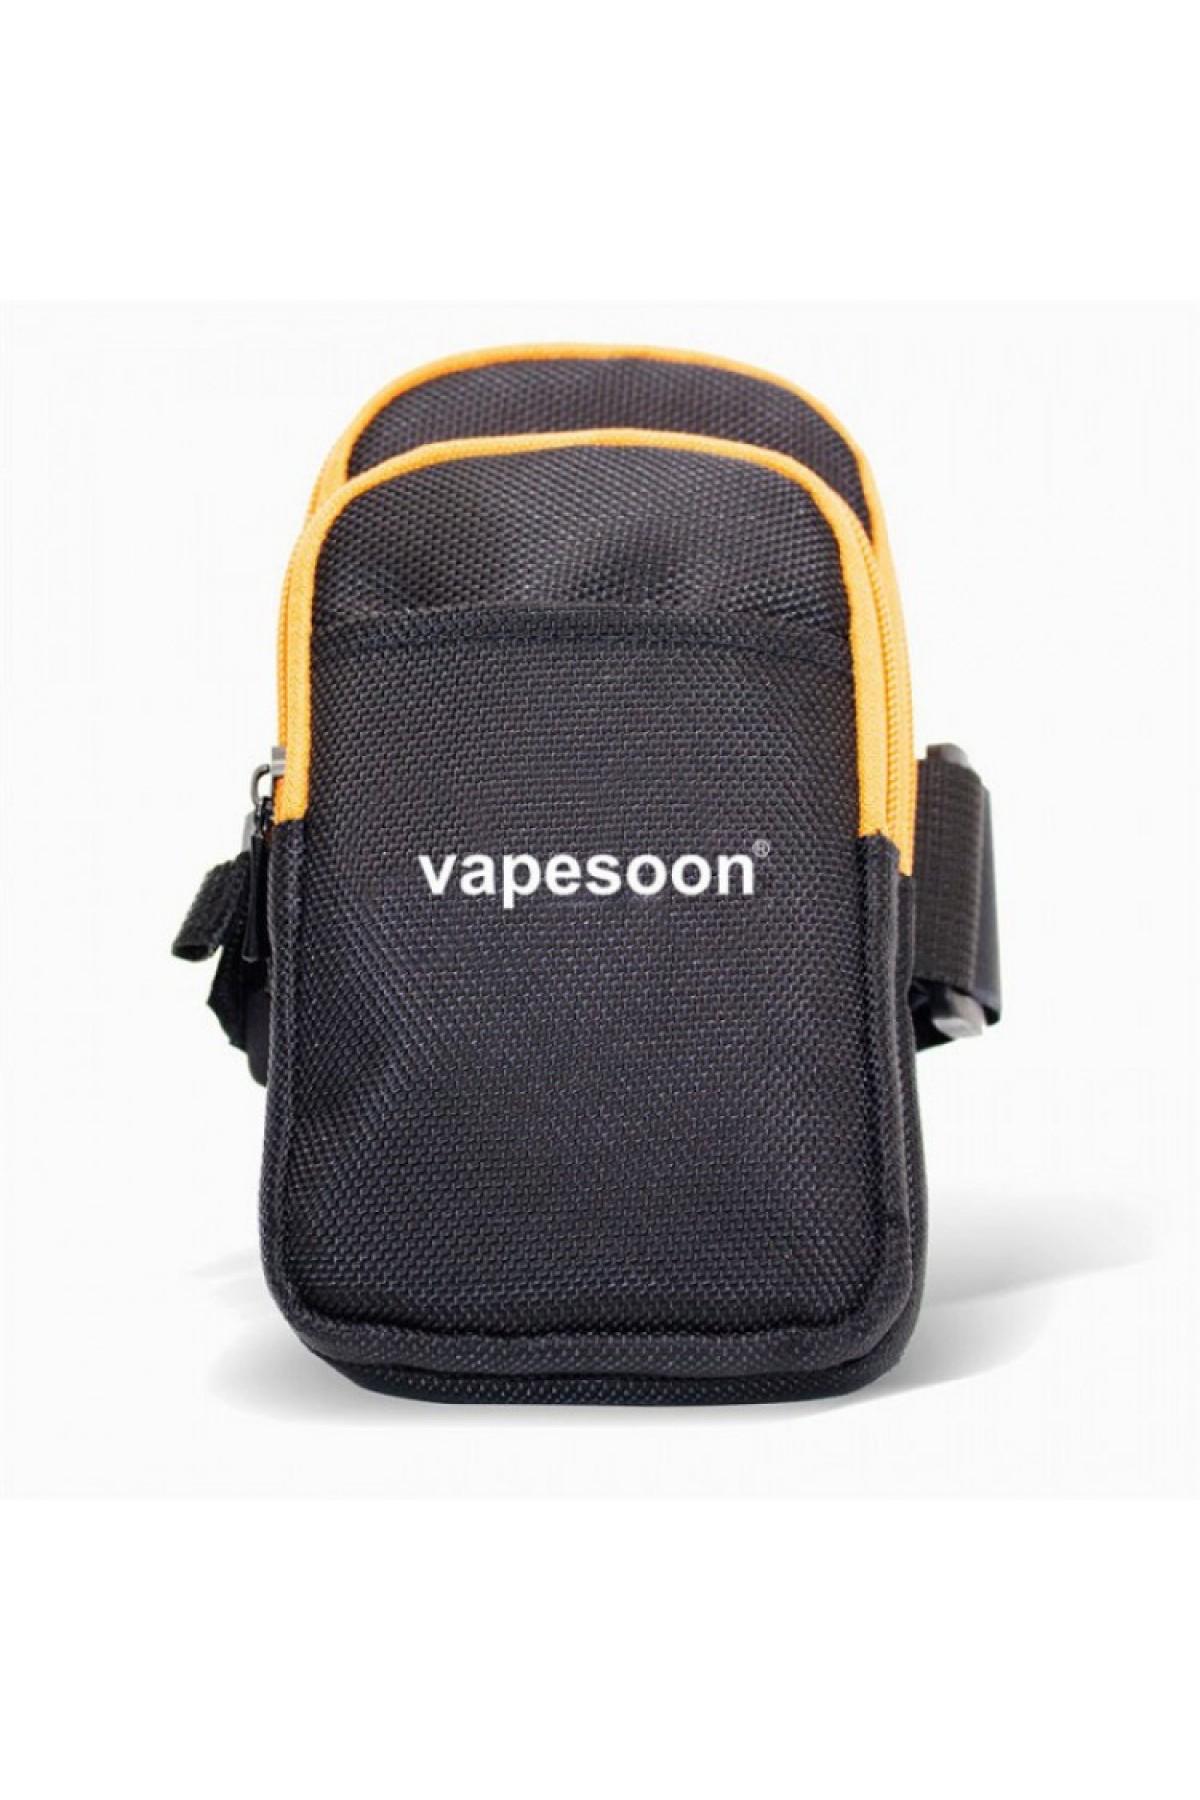 Vapesoon - Elektronik Sigara Taşıma Kol Çantası